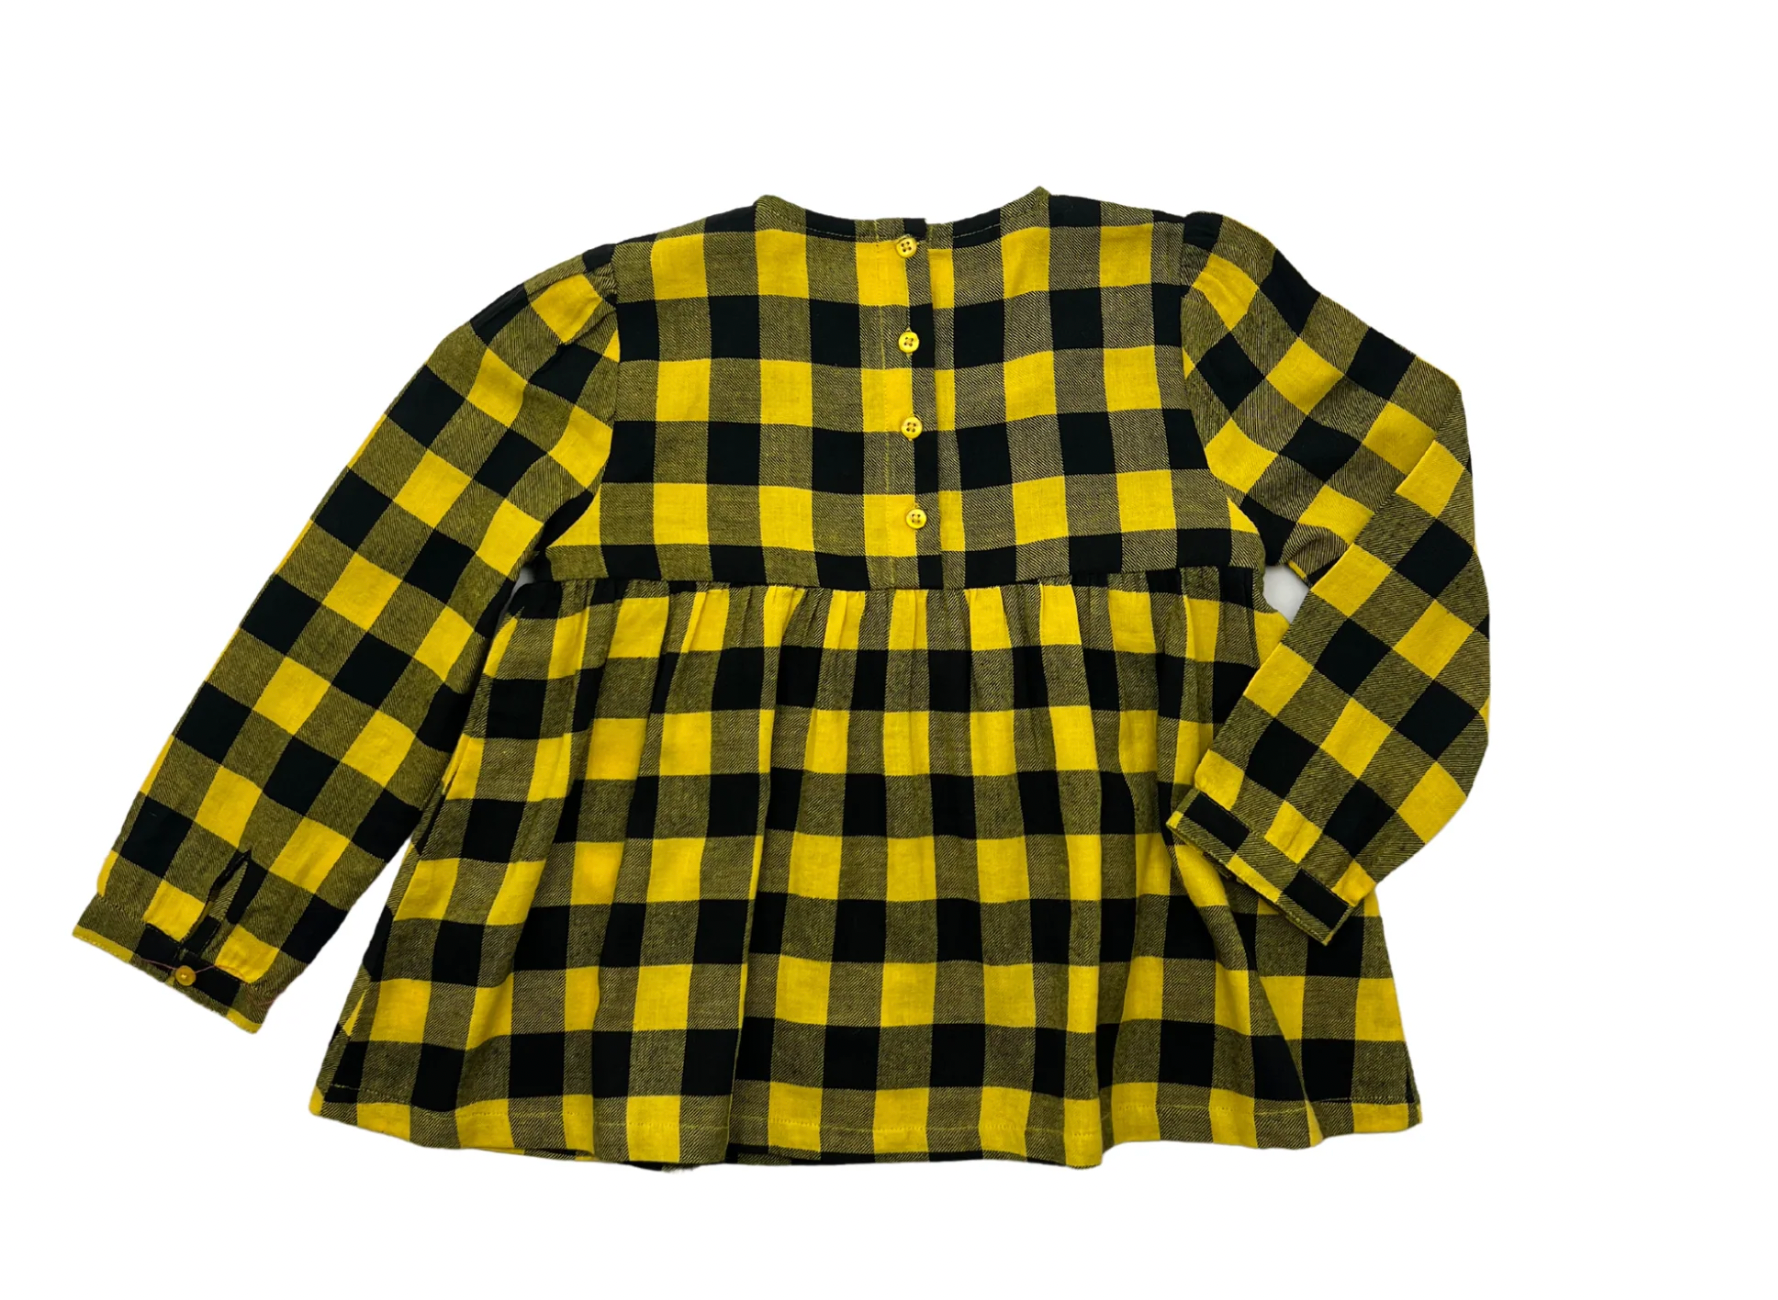 BONTON - Yellow checked blouse &amp; skirt set - 6 years old